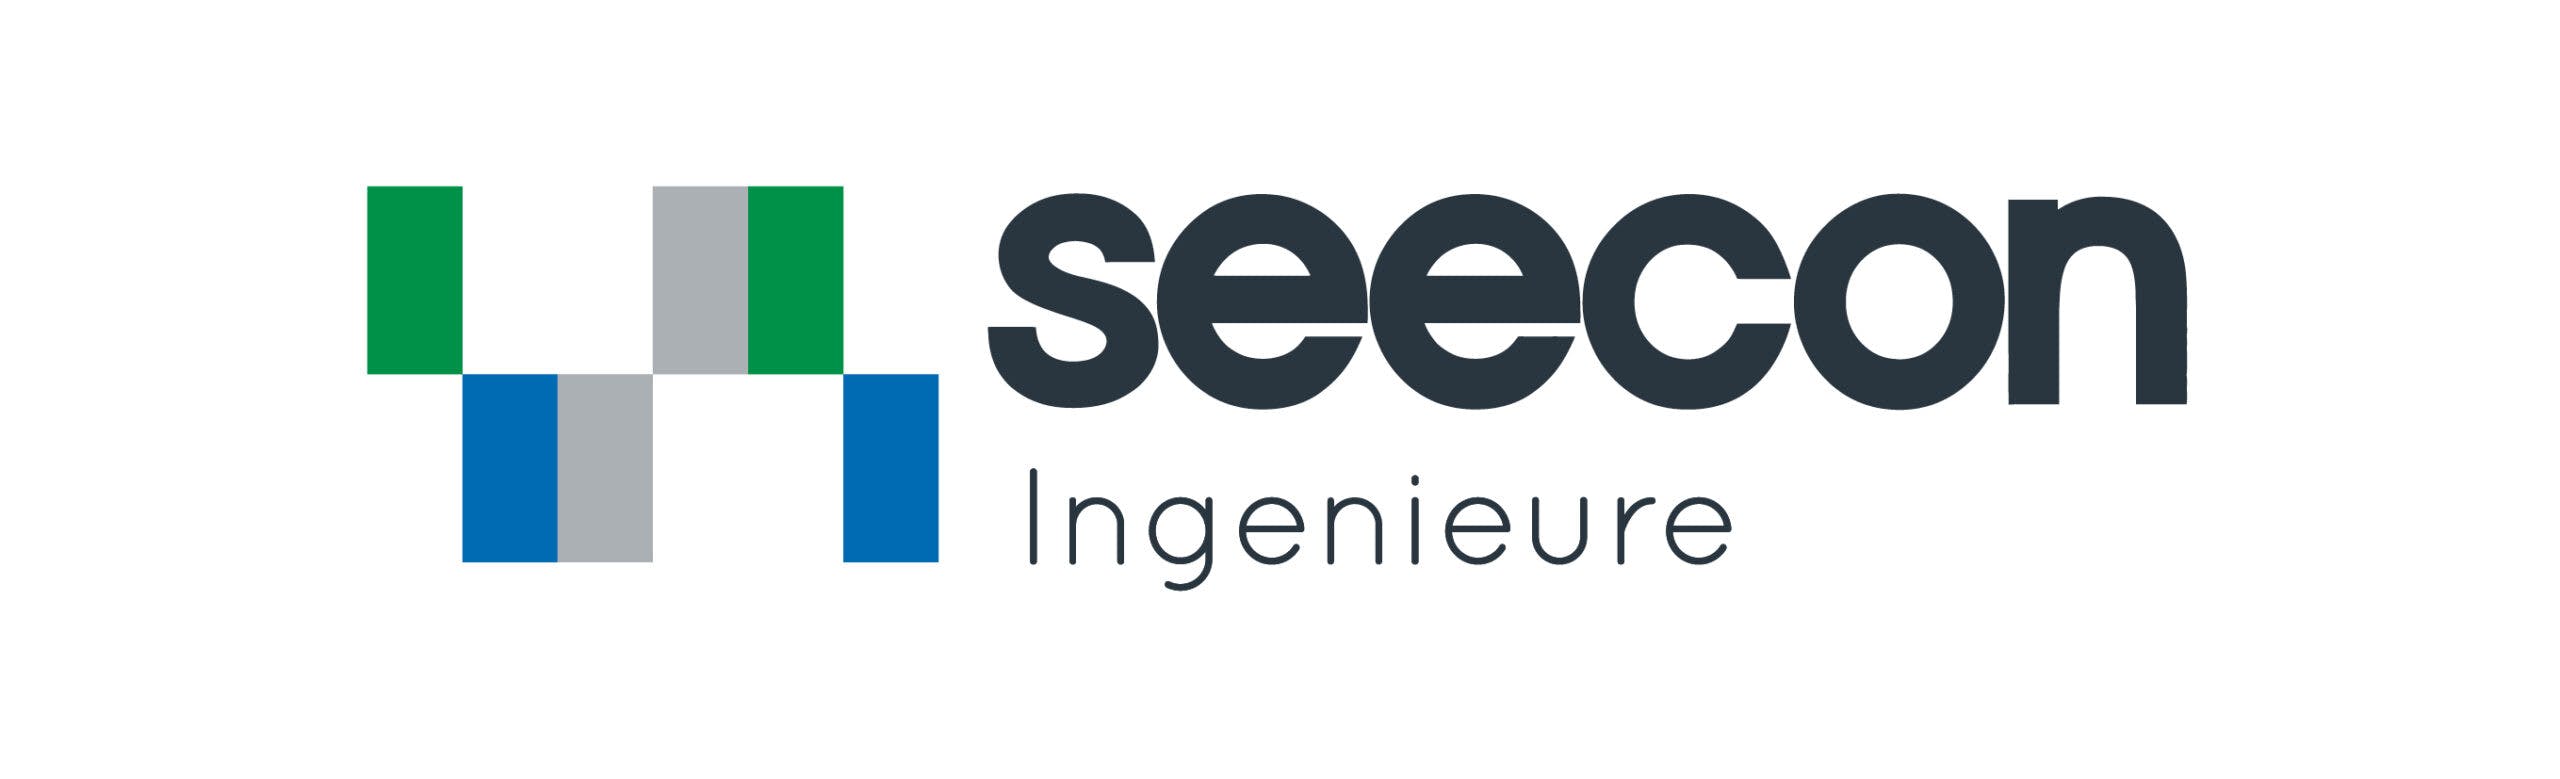 seecon Ingenieure GmbH logo